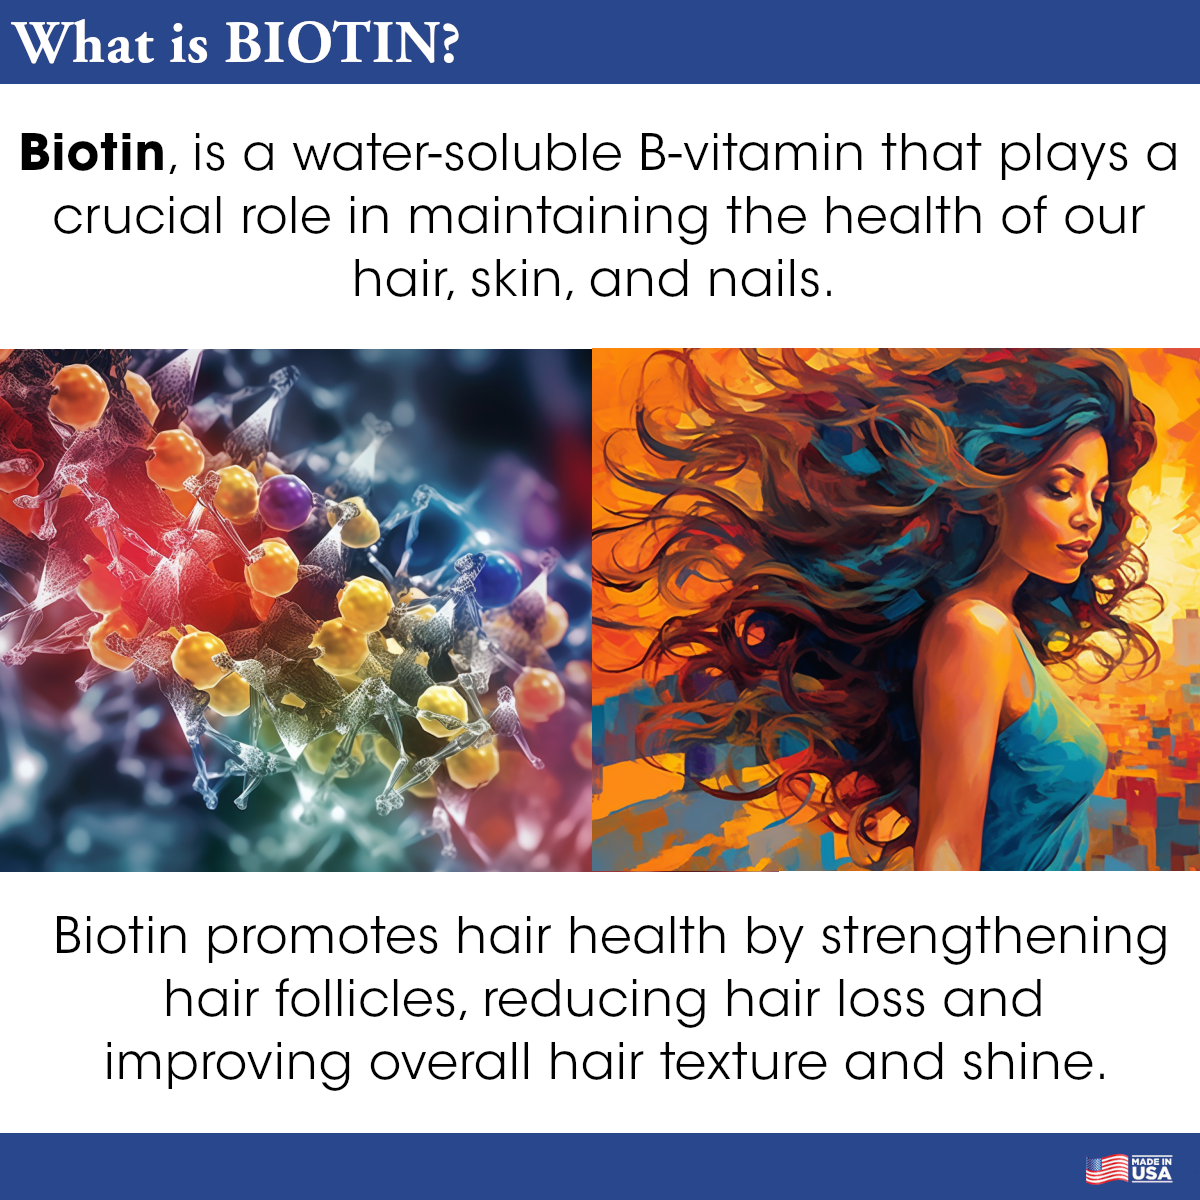 Difeel Biotin Pro-Growth Hair Mask 12 oz. (PACK OF 2)